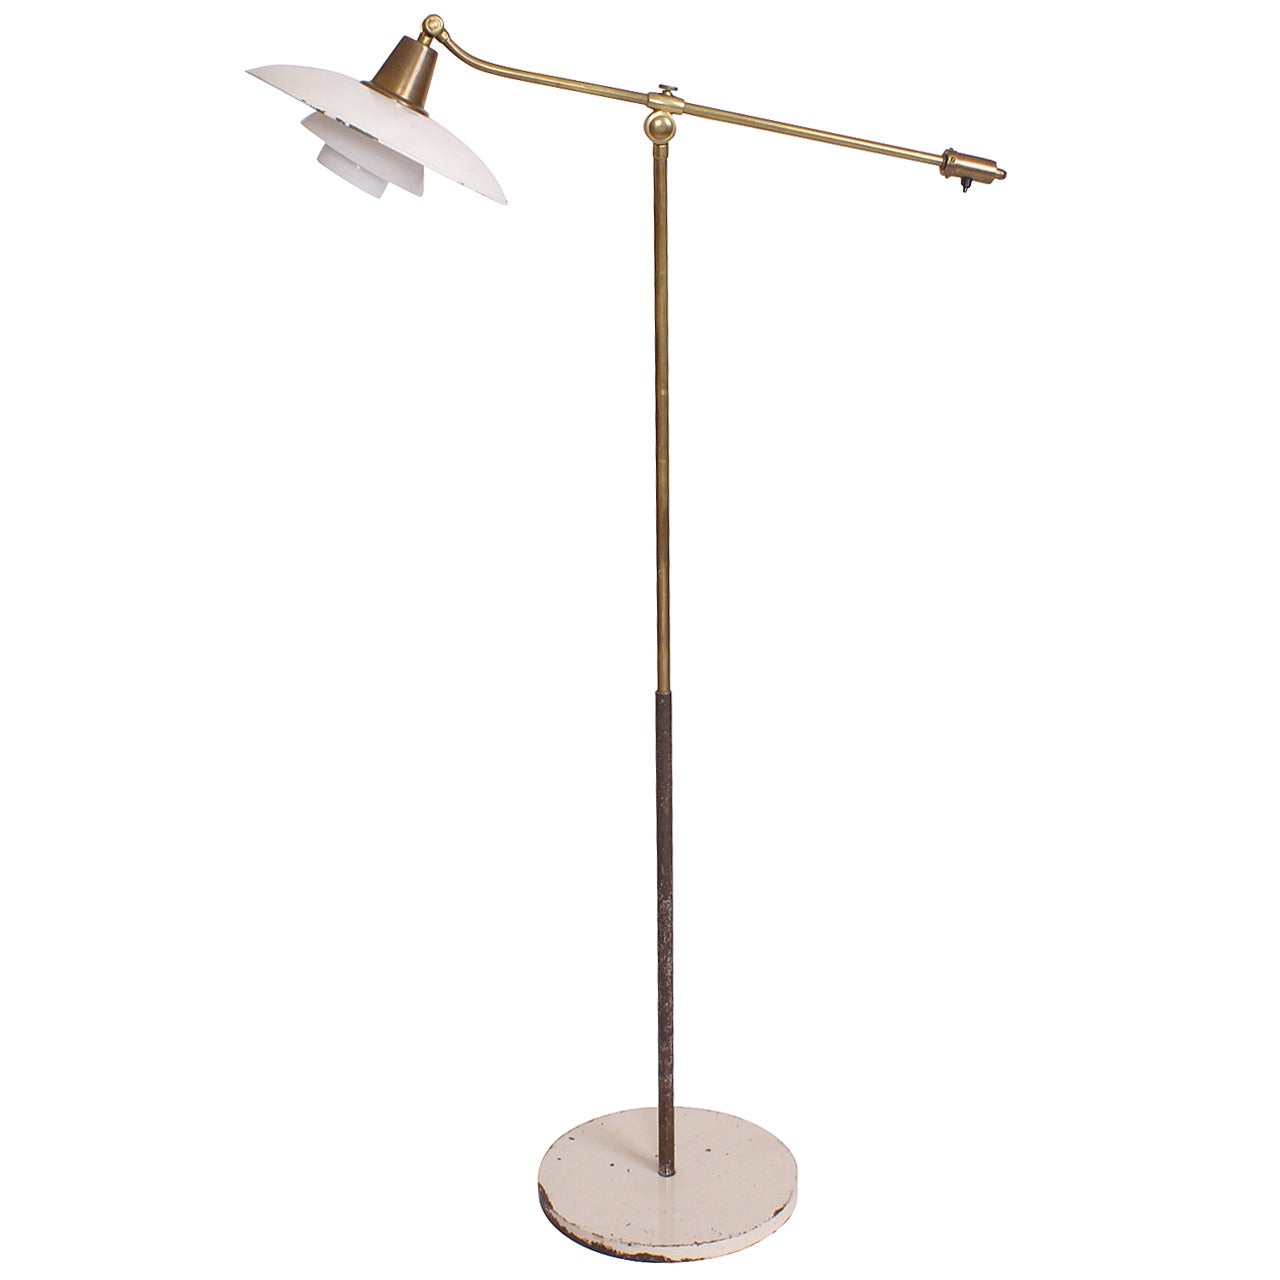 Poul Henningsen "Water Pump" 1940s Floor Lamp For Sale